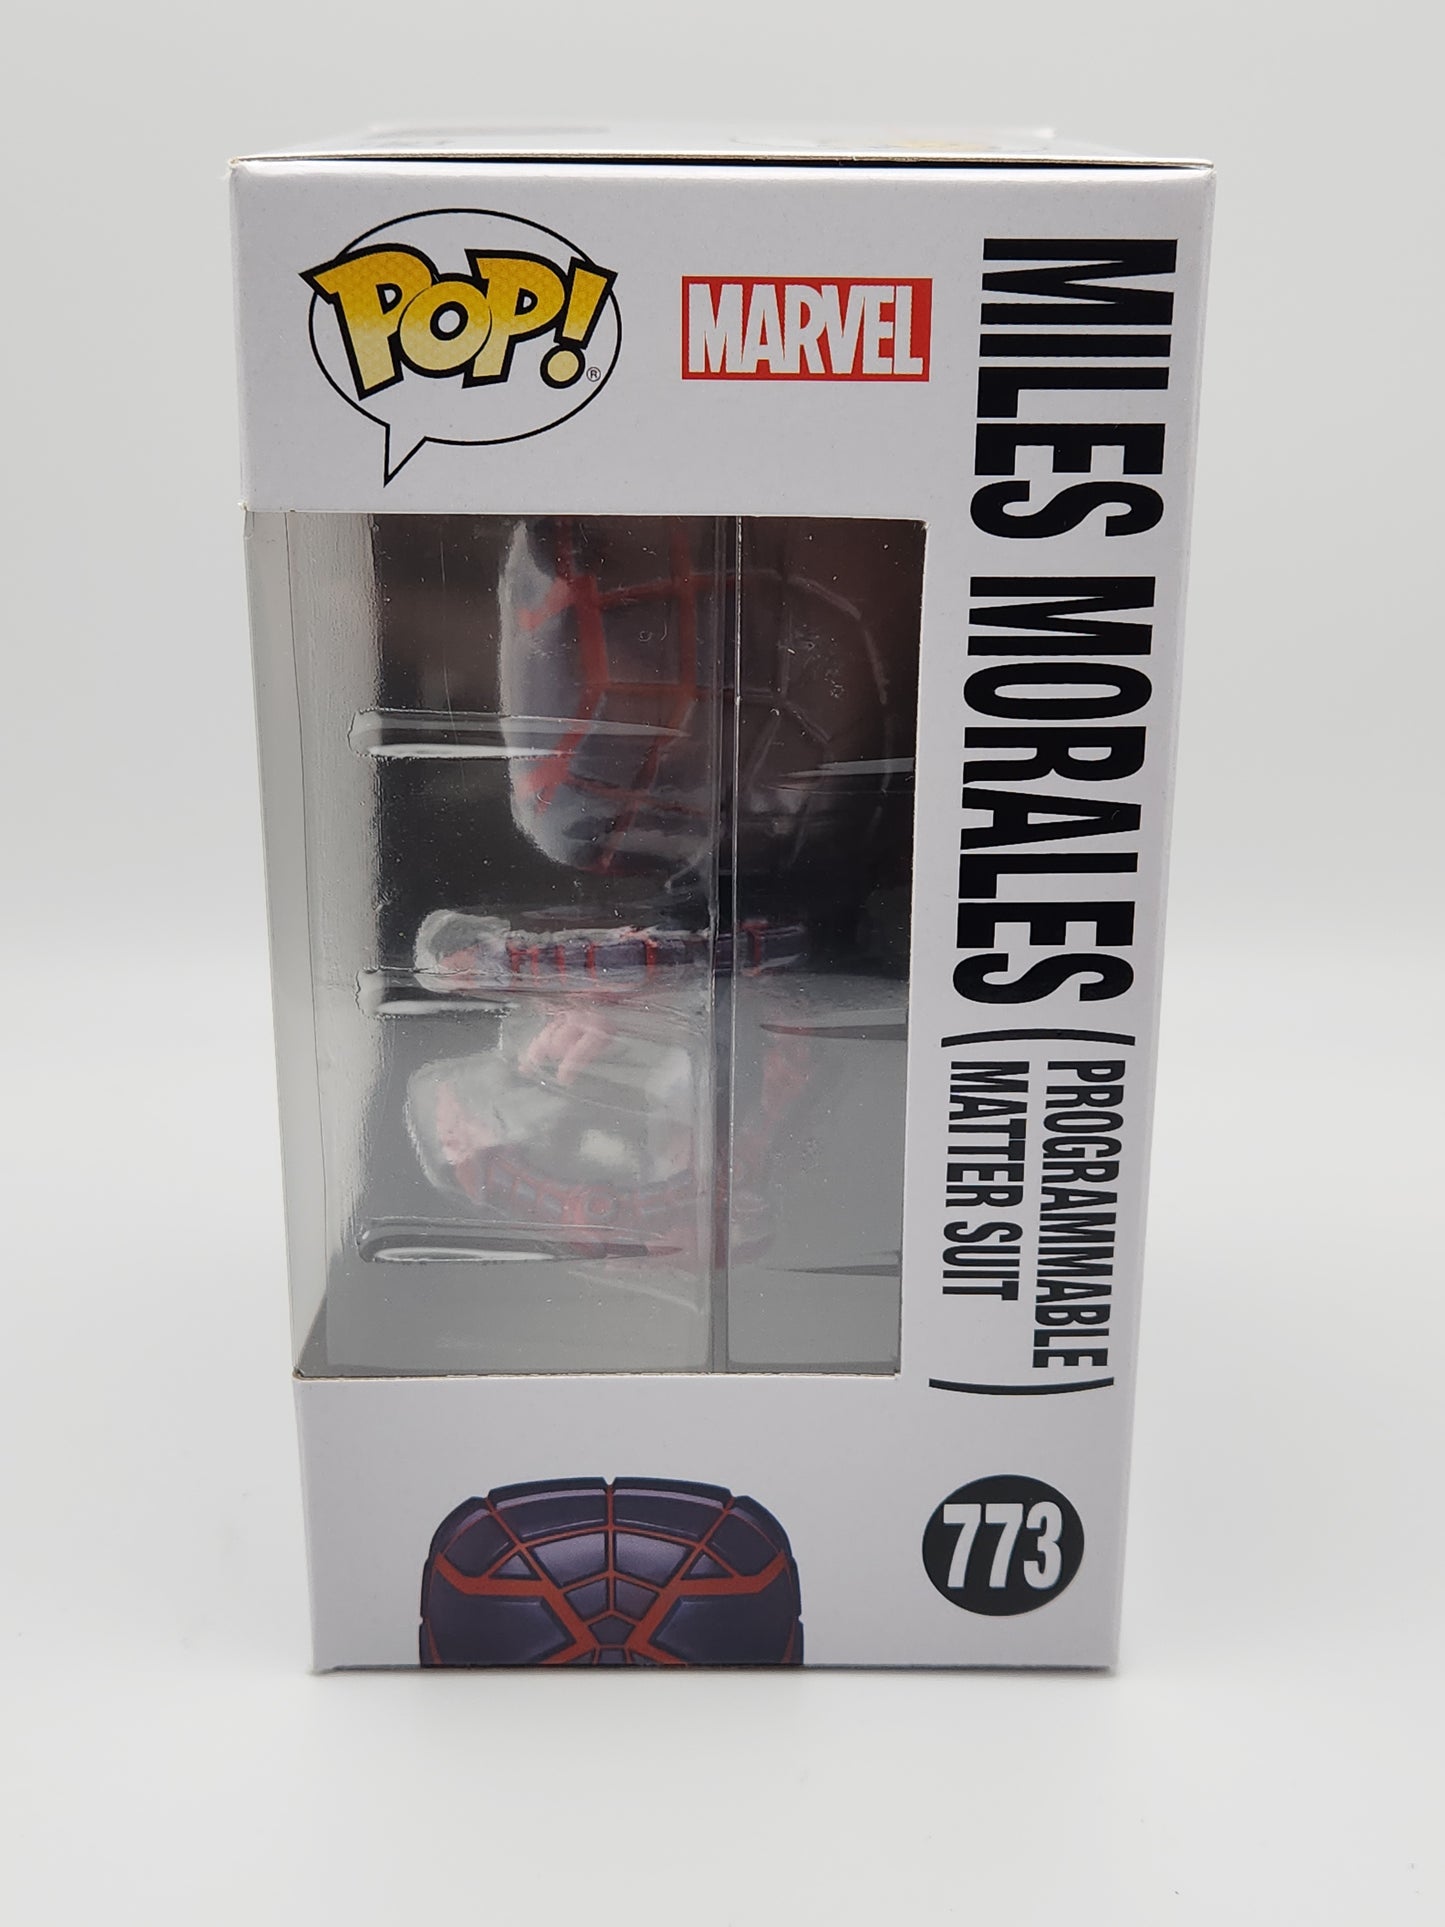 Funko Pop! Marvel- Spider-Man: Miles Morales (Programmable Matter Suit)